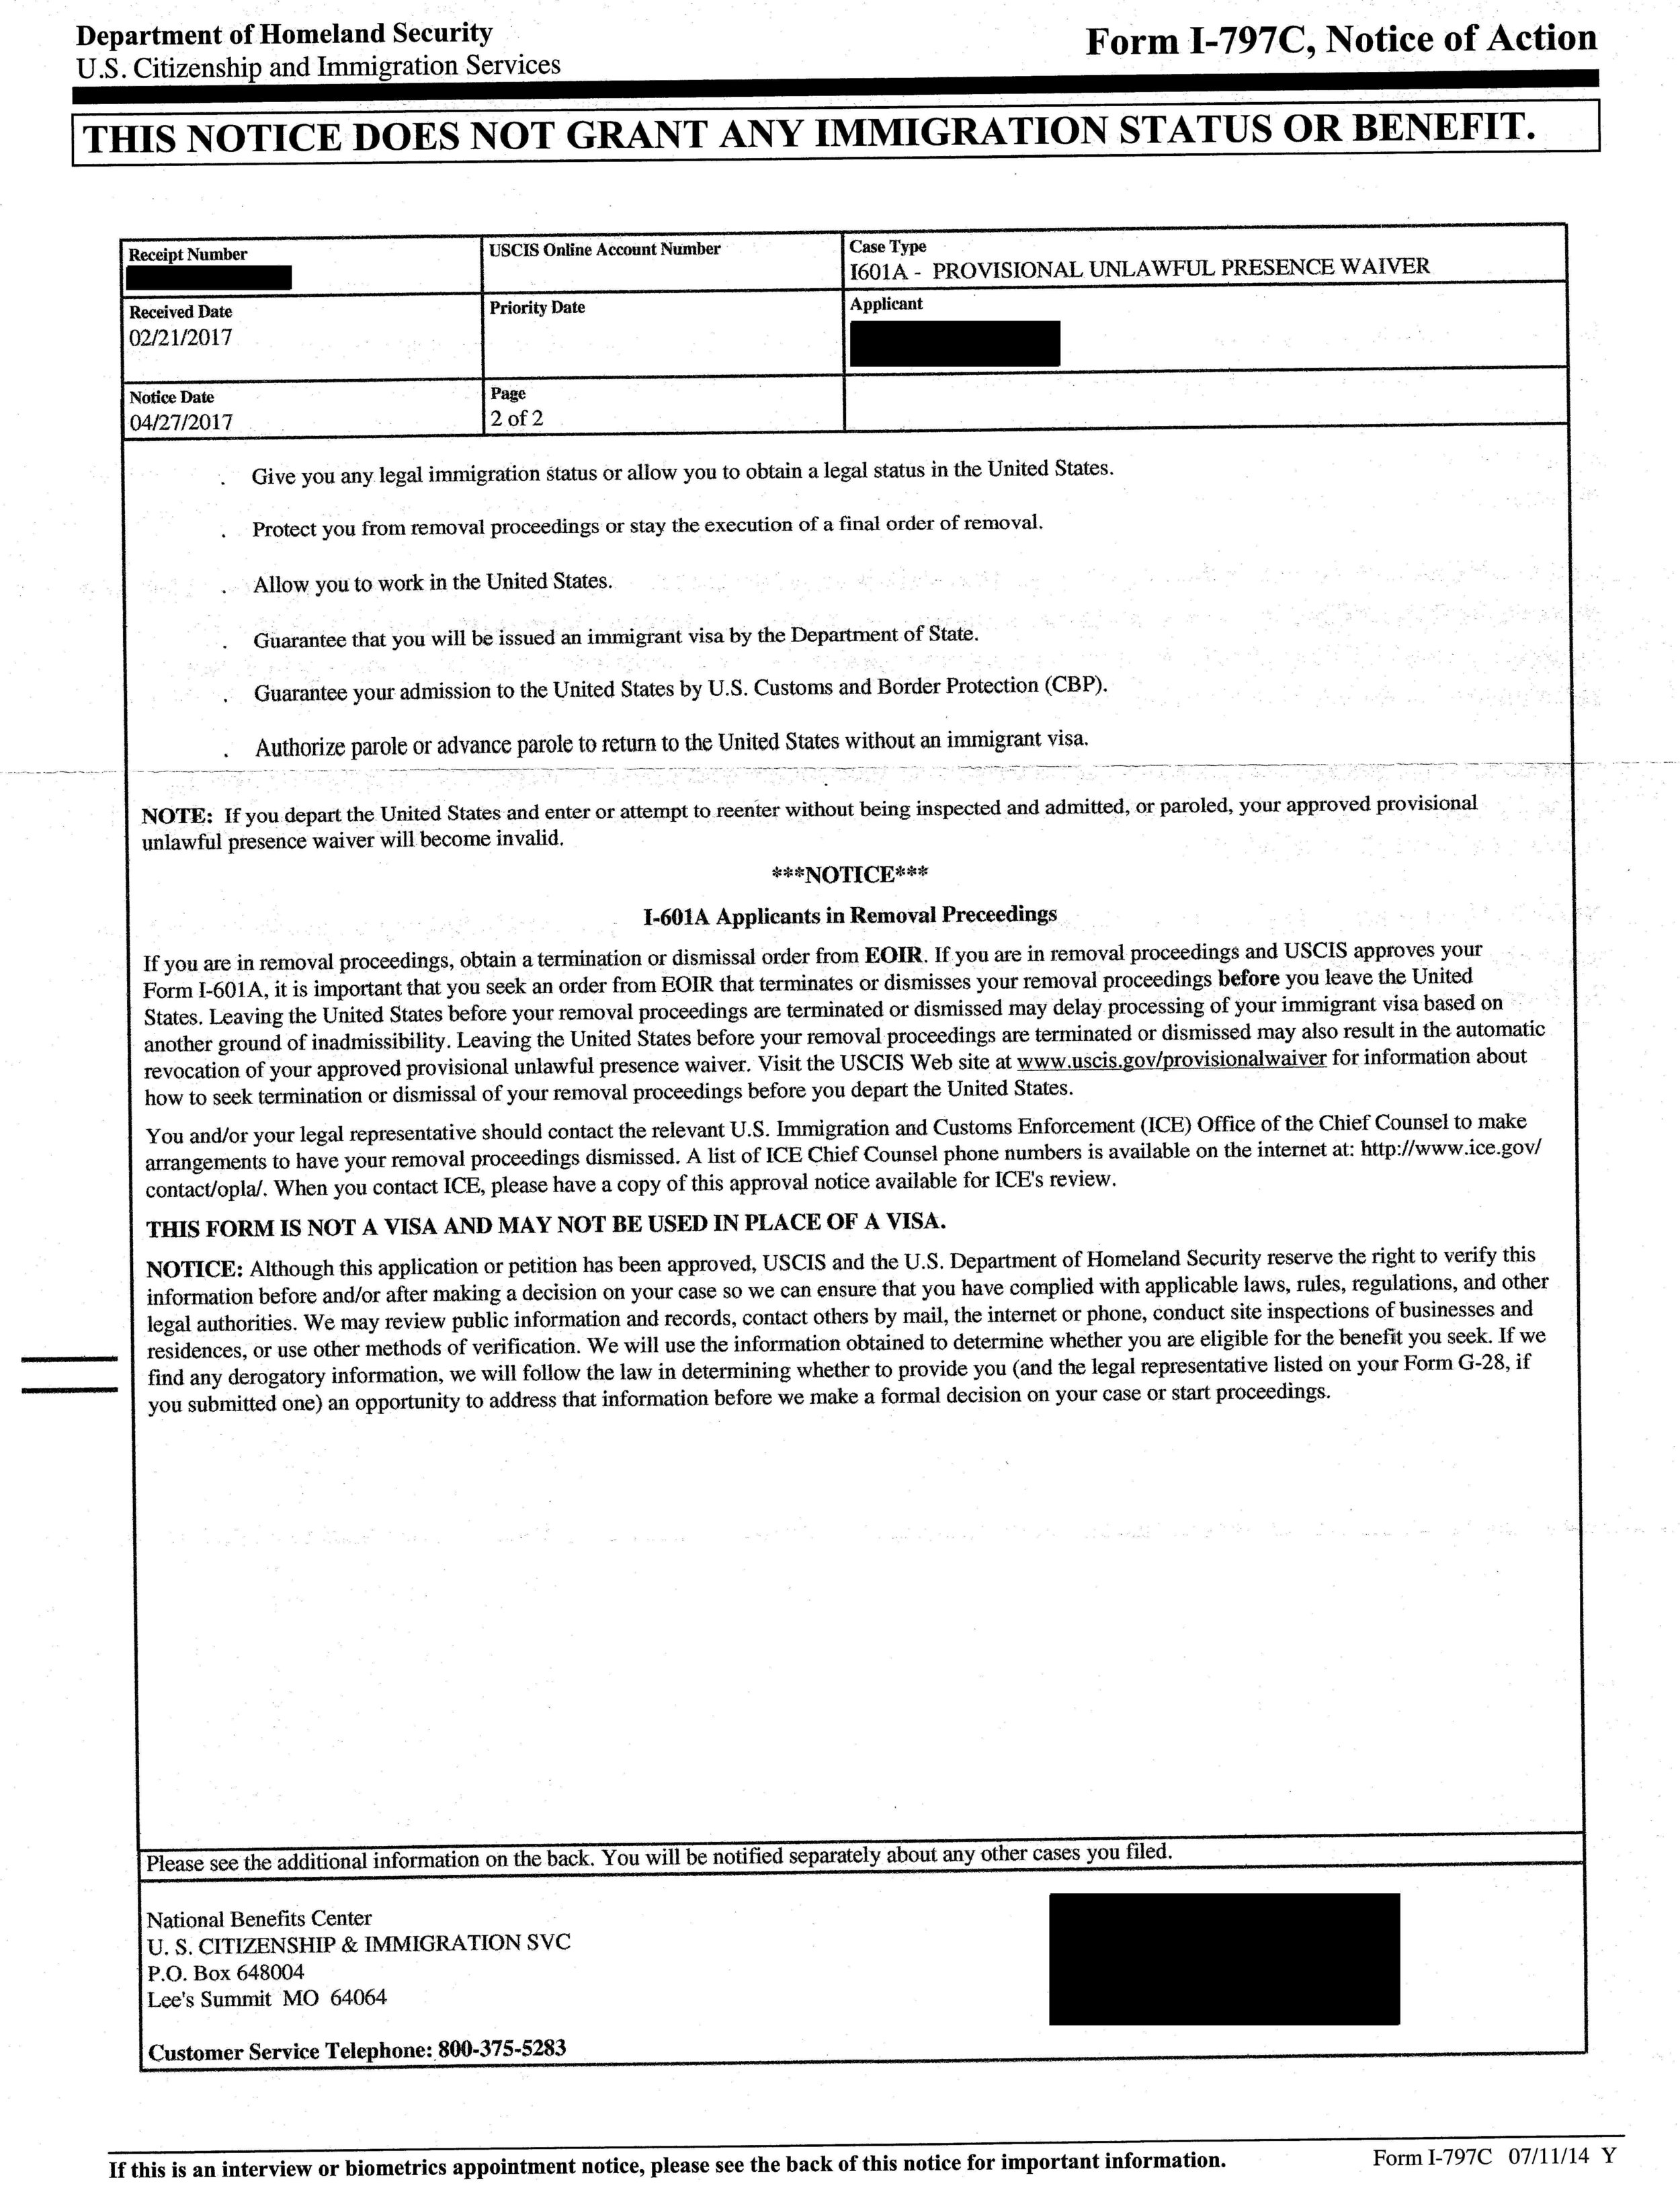 Form I-797C, I-601A Approval Notice, Page 2